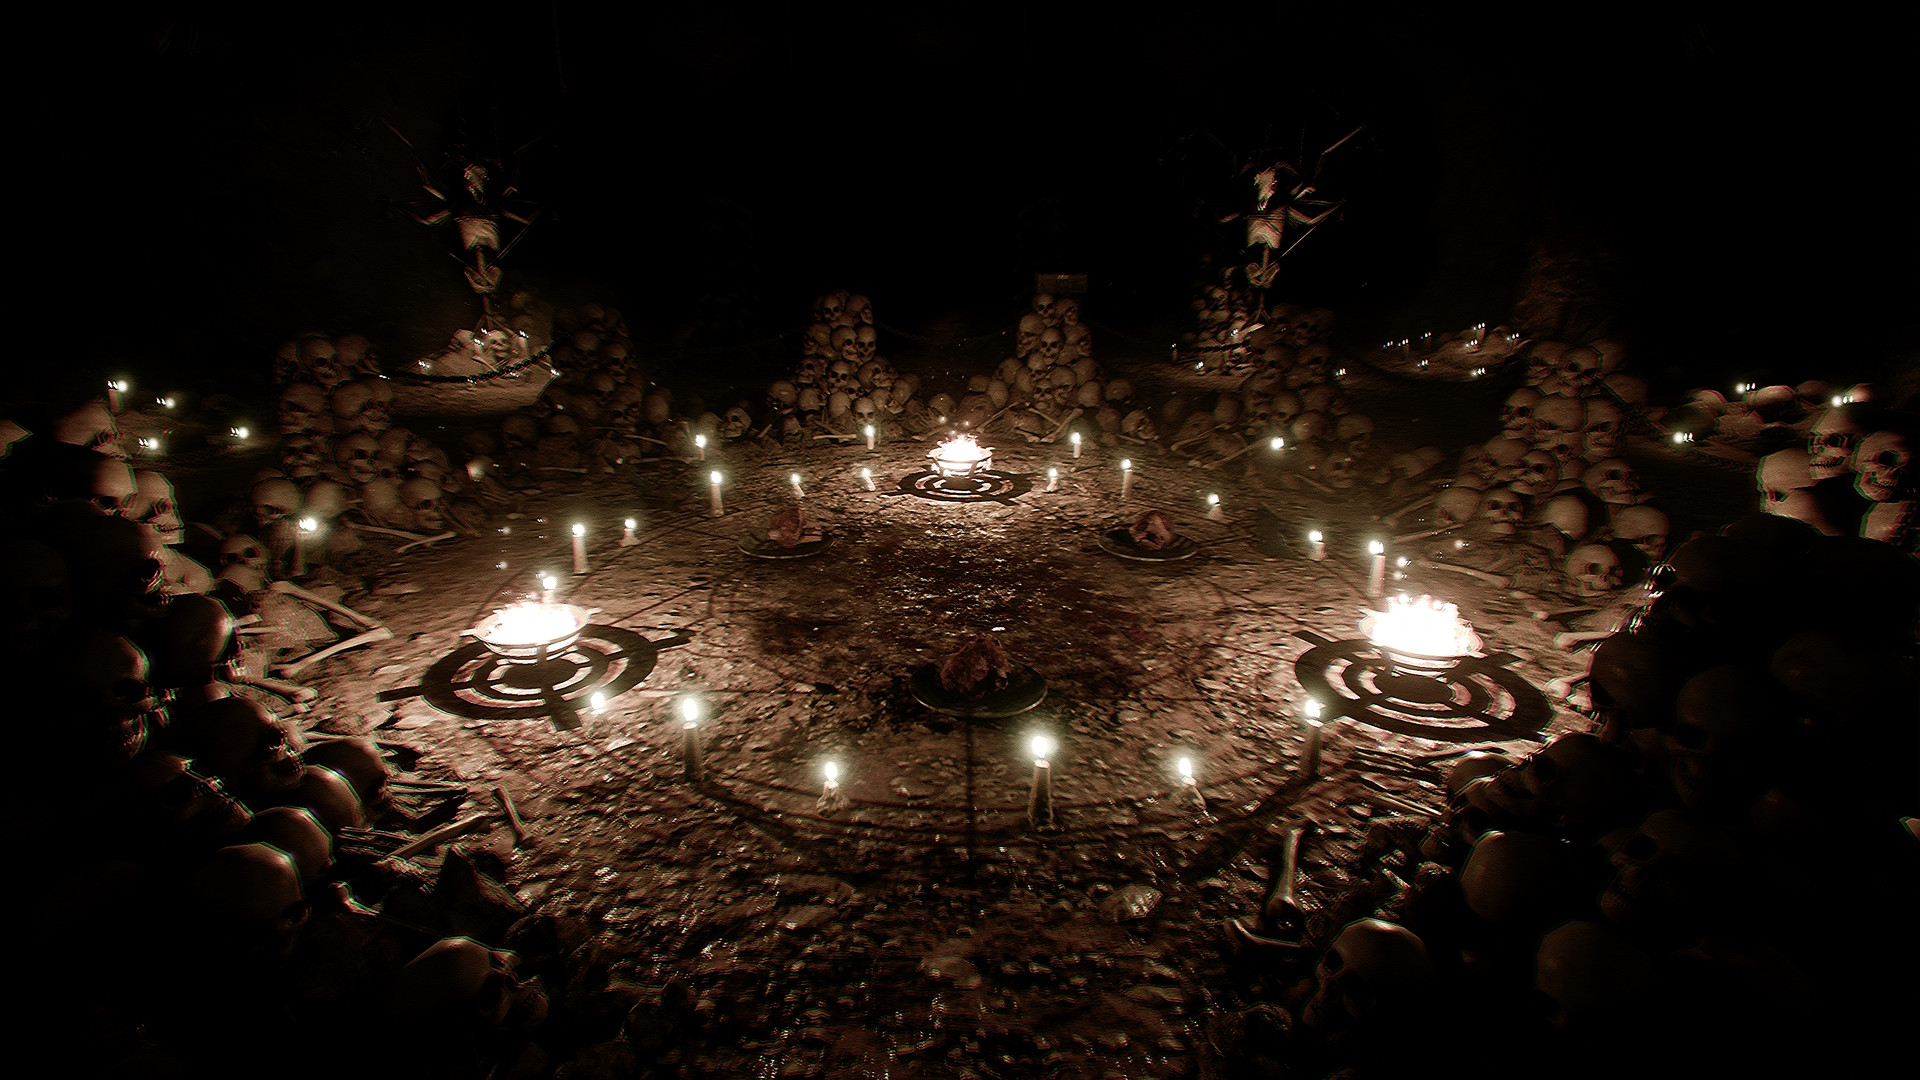 The Dark Occult screenshot